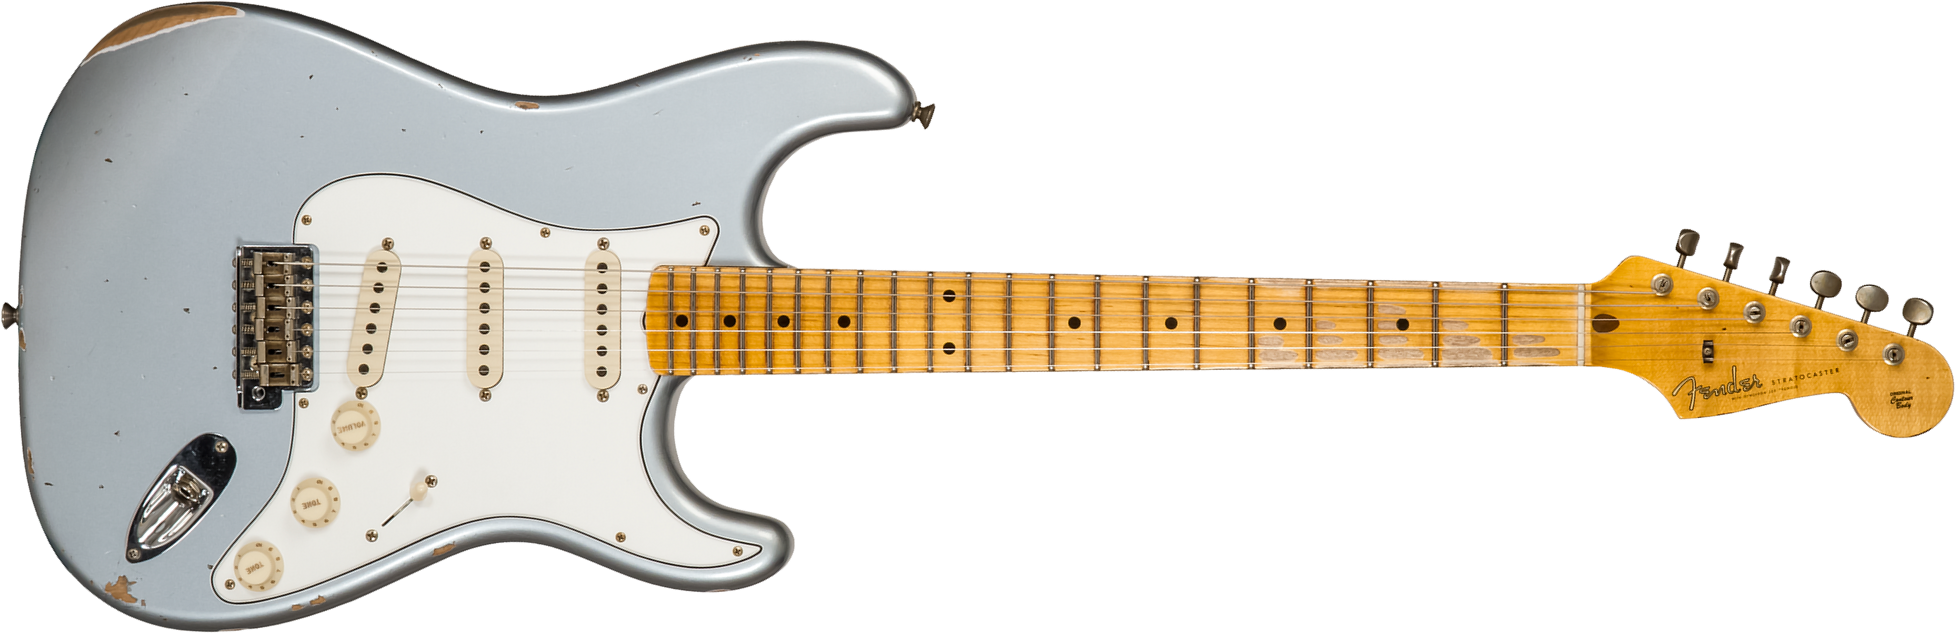 Fender Custom Shop Strat Tomatillo Special 3s Trem Mn #cz571096 - Relic Aged Ice Blue Metallic - Guitarra eléctrica con forma de str. - Main picture